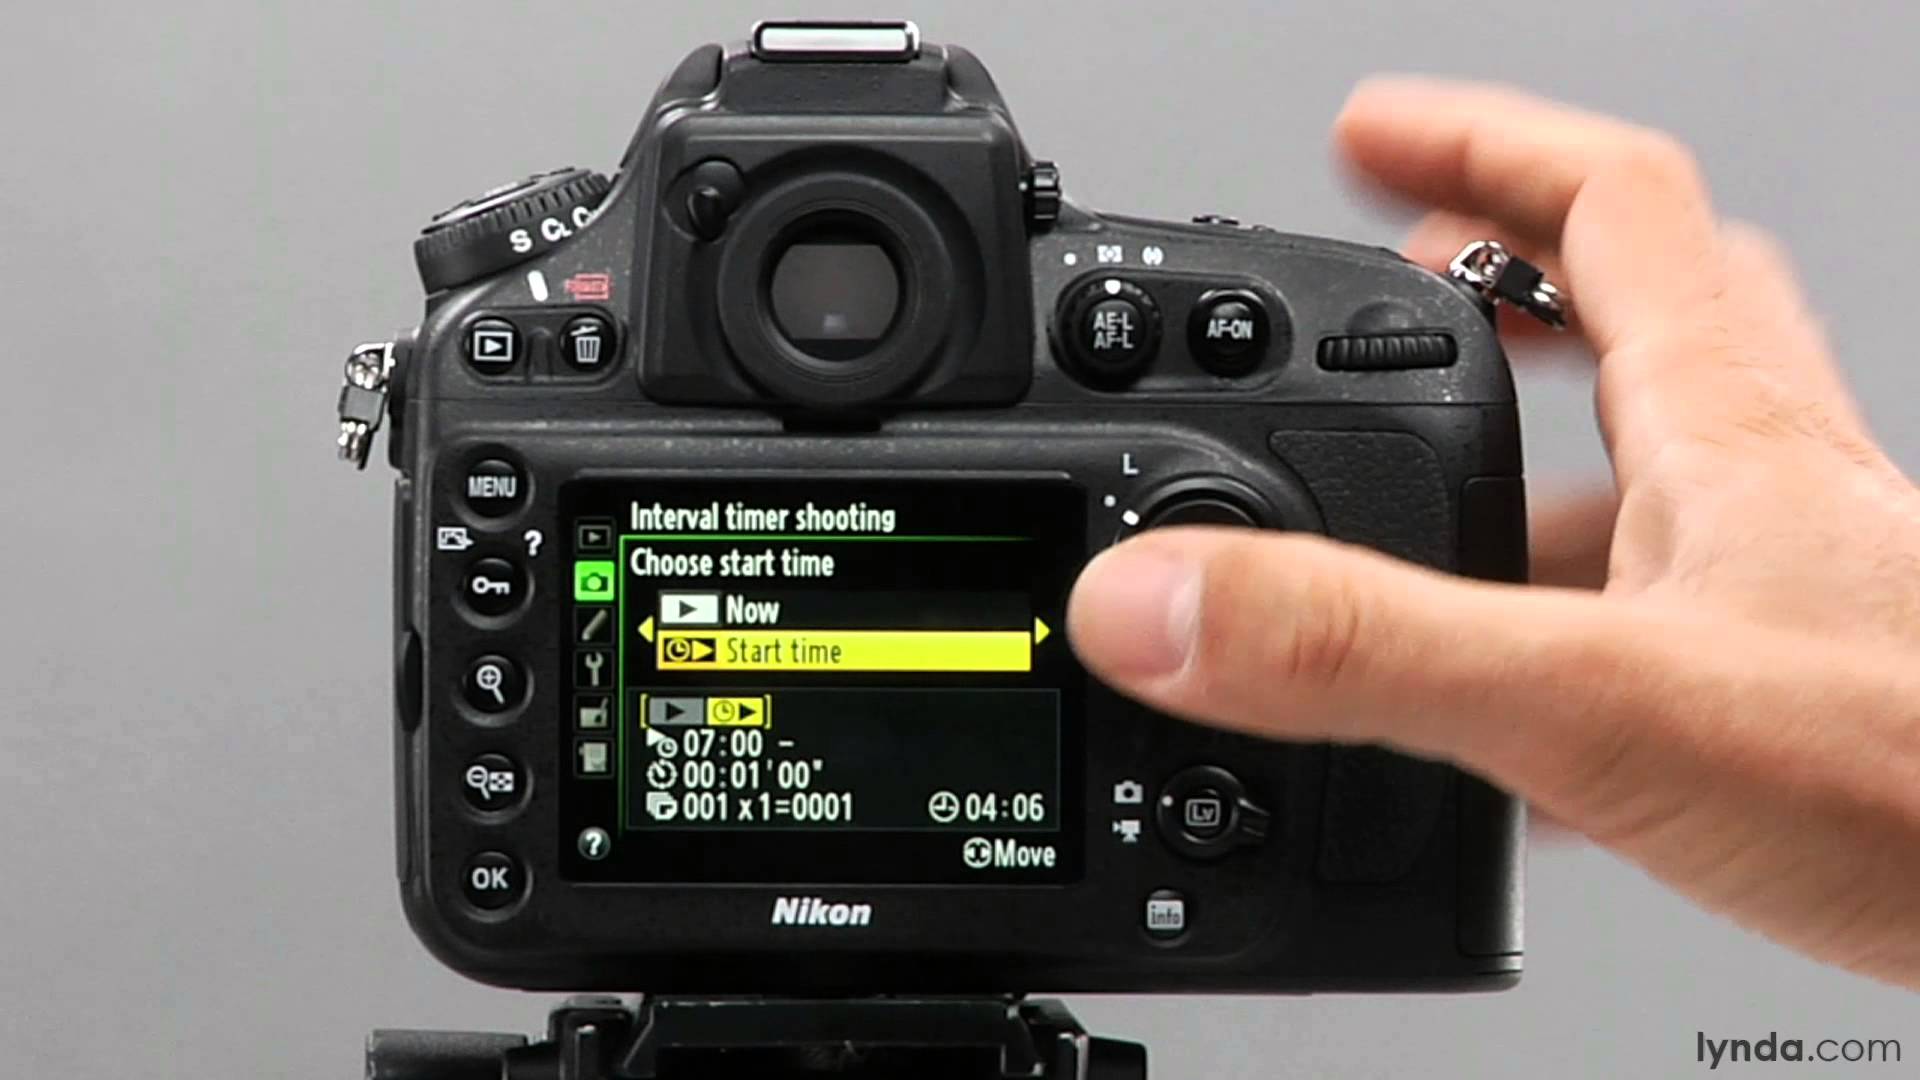 Nikon D800 tutorial: Interval timer | lynda.com - YouTube